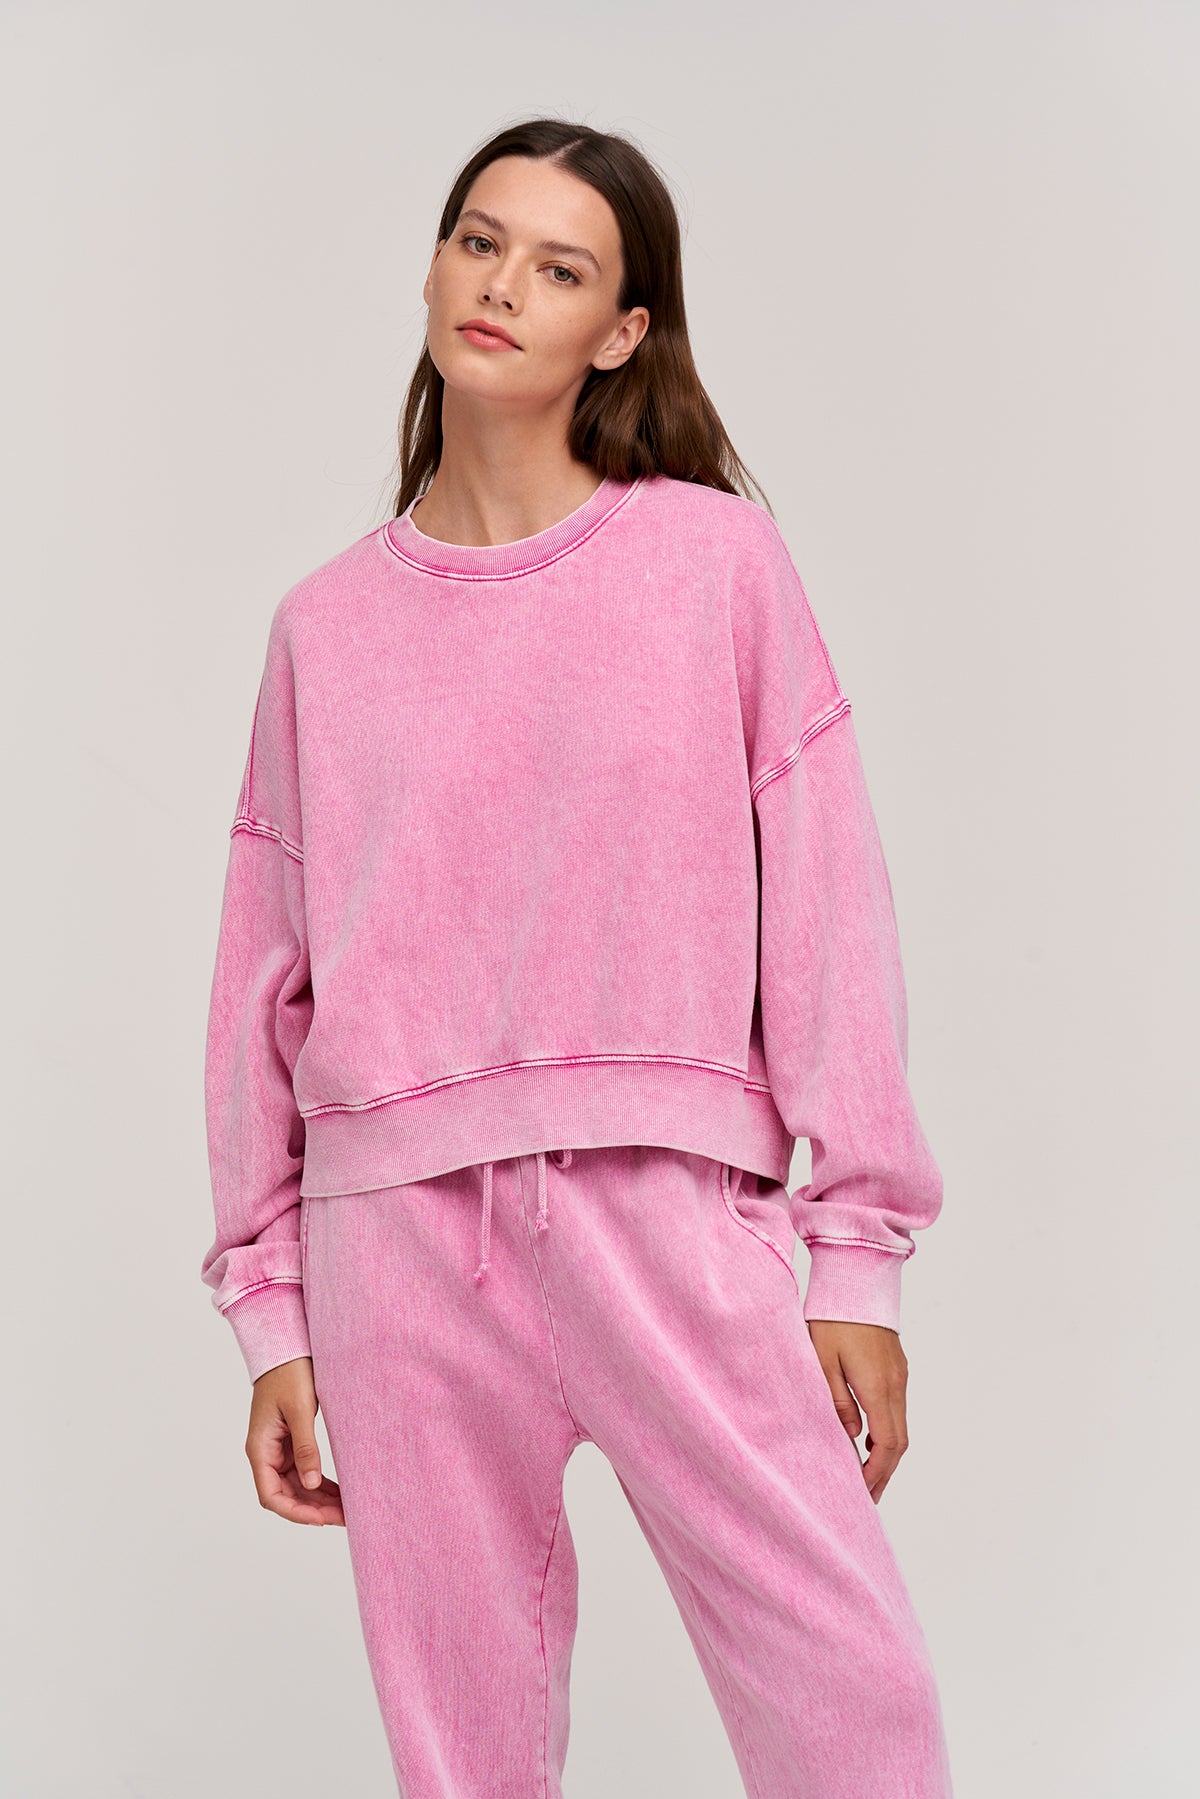   lindsey fleece sweatshirt pink front 